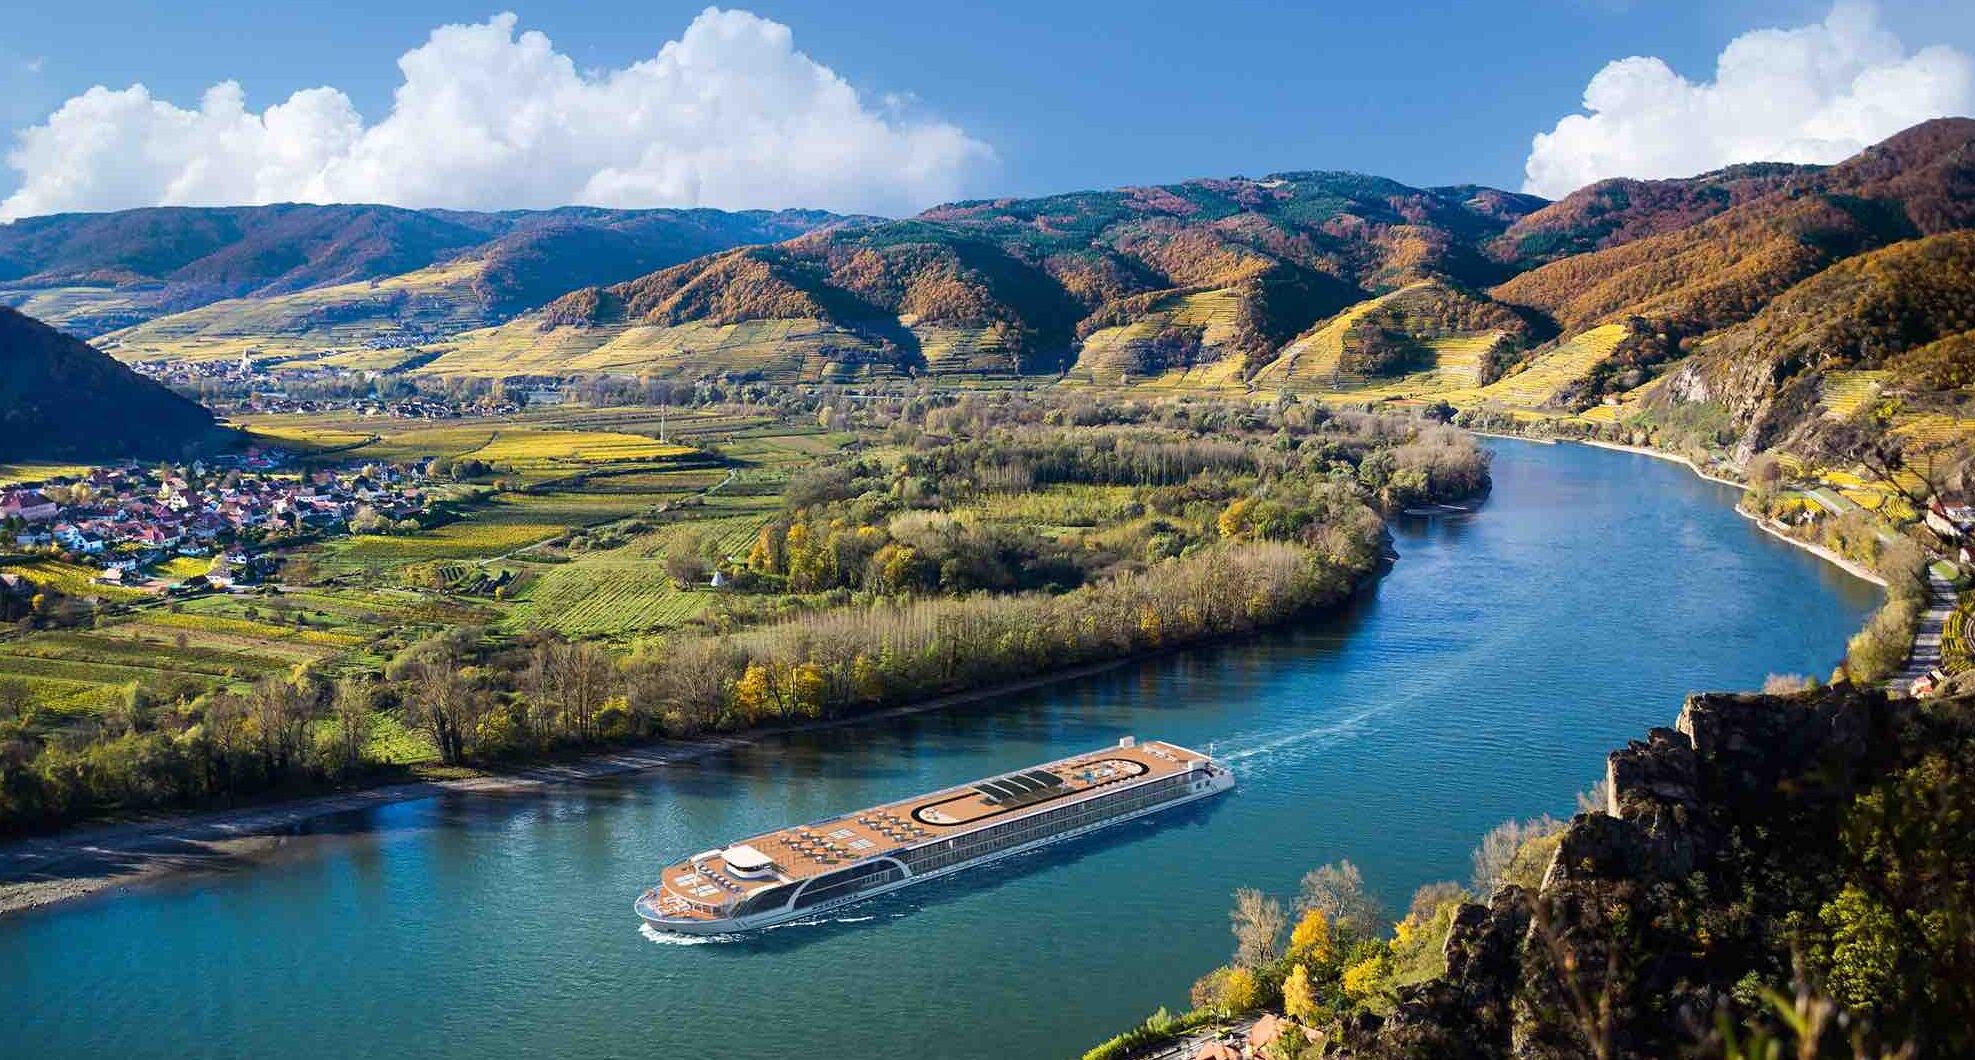 Ama Magna on the Danube River